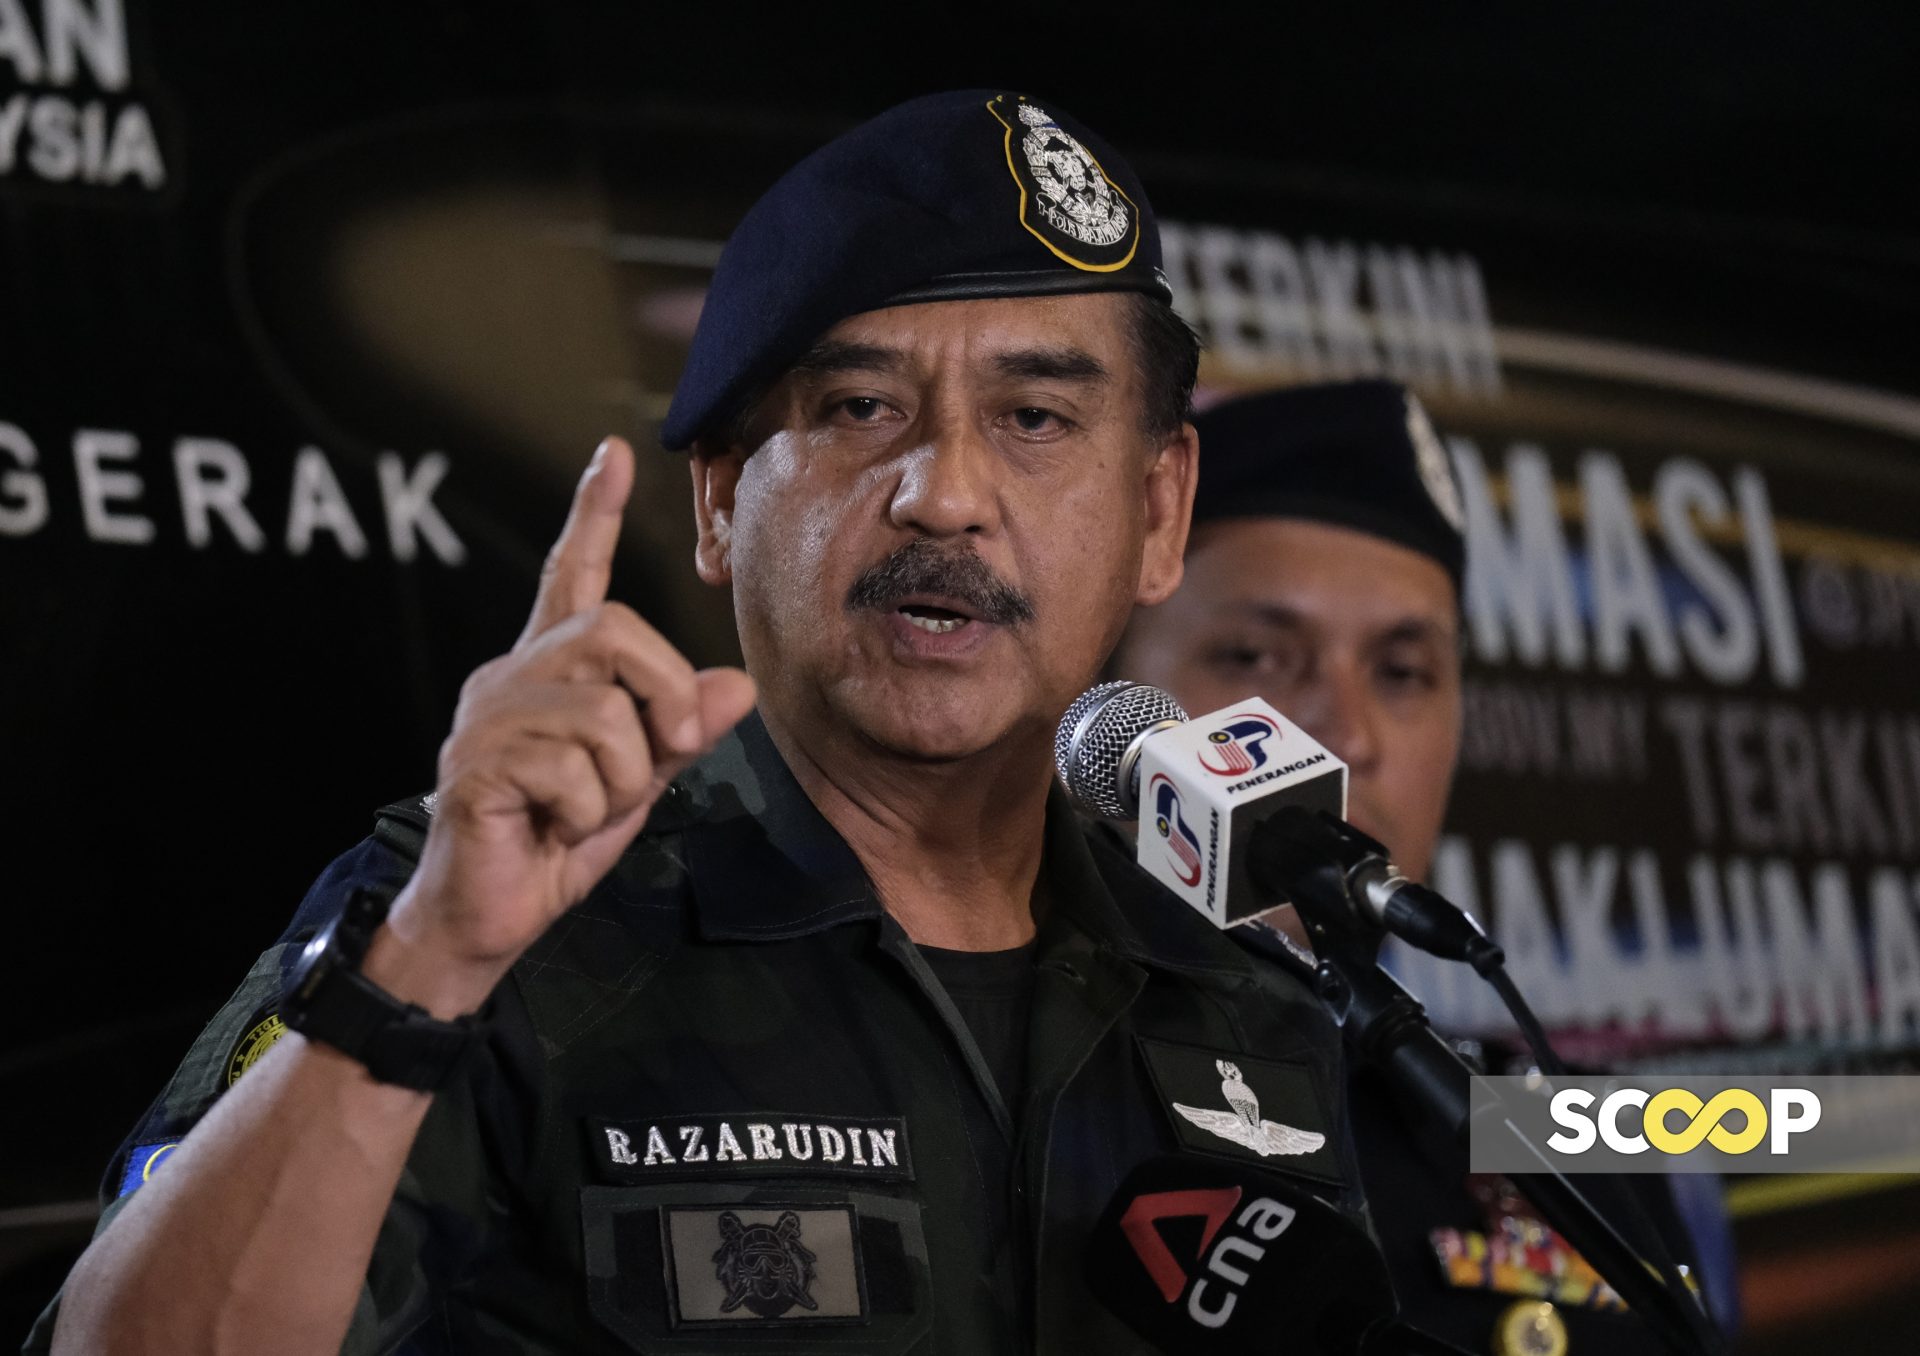 PDRM terima lebih 40 laporan polis ancaman bom palsu: KPN